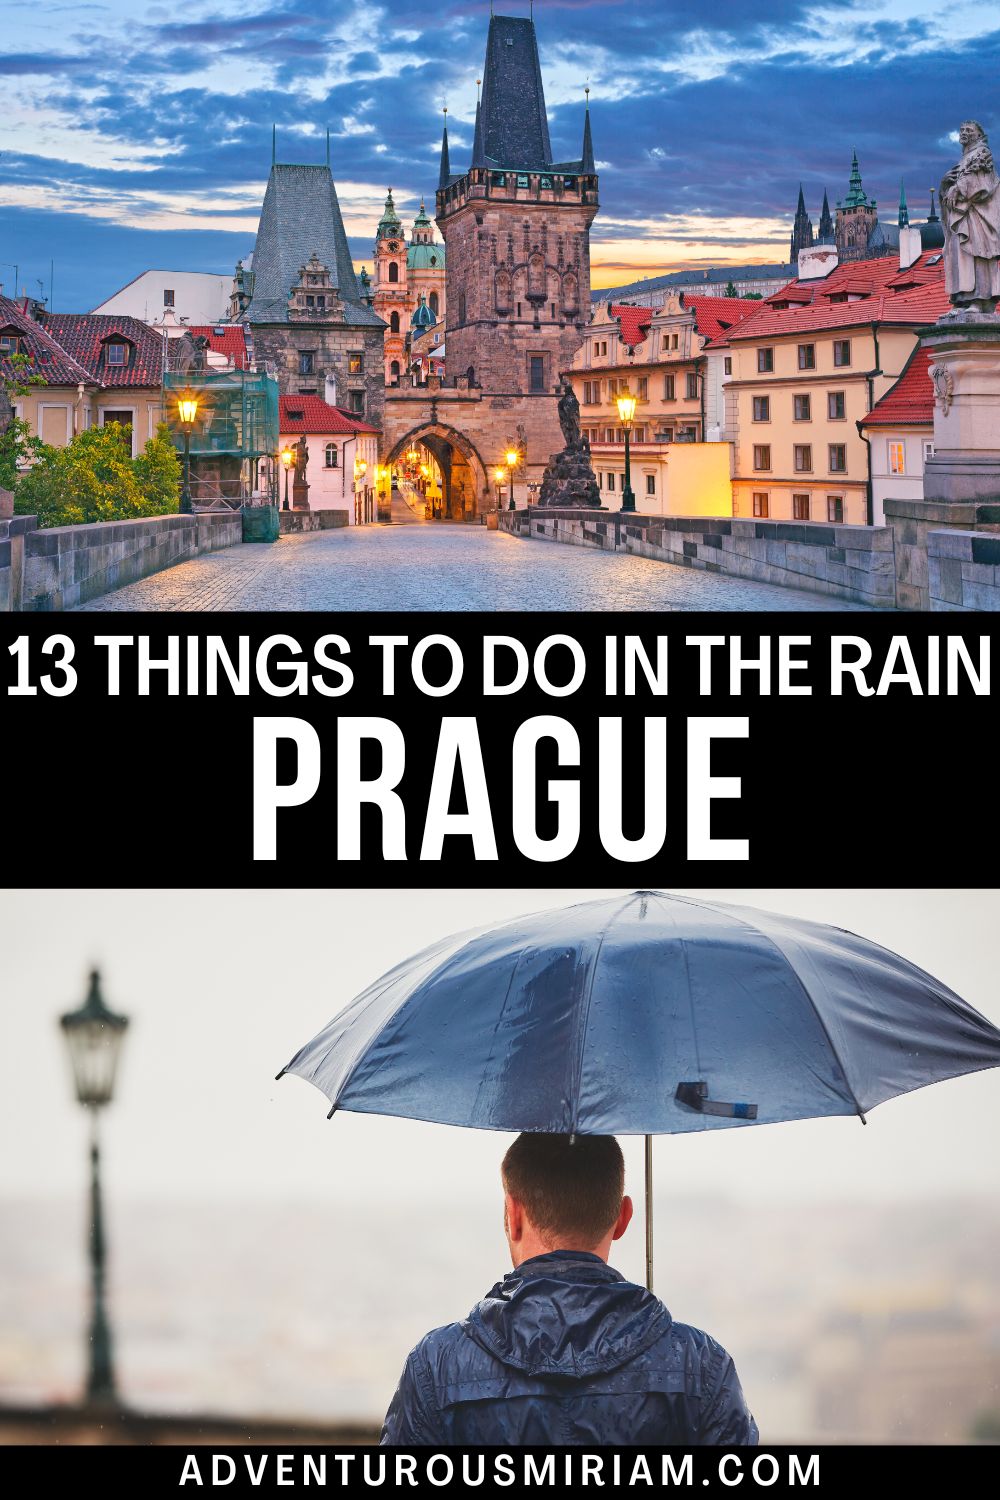 13 fun things to do in Prague in the rain - Adventurous Miriam